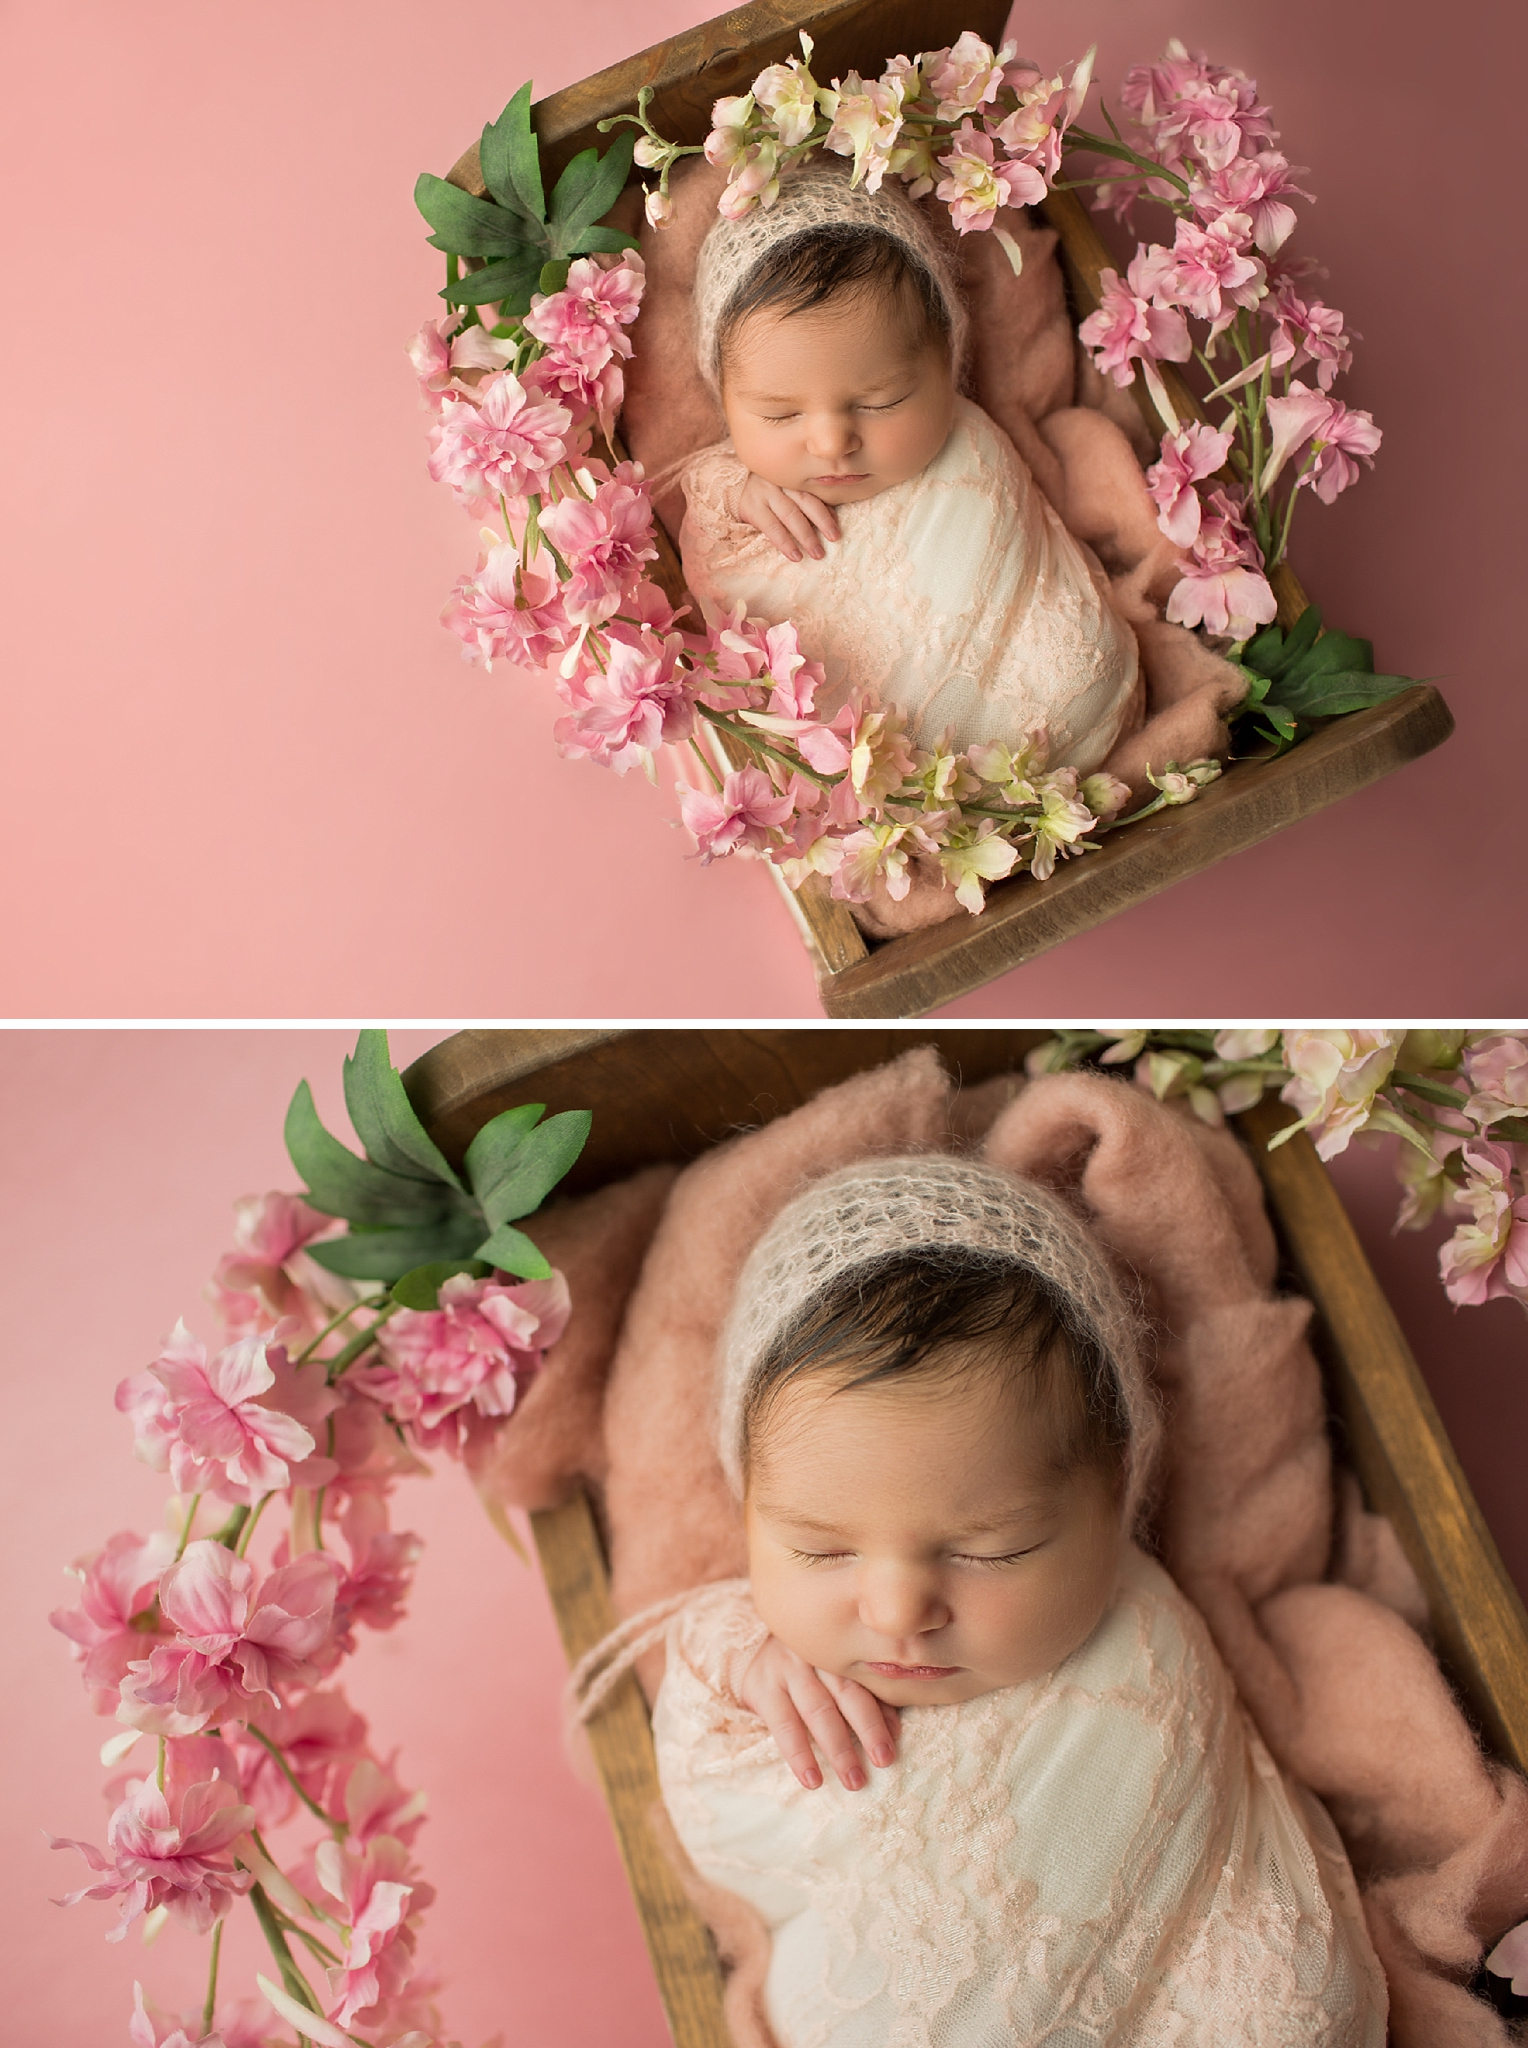 newborn baby with pink flowers surrounding her